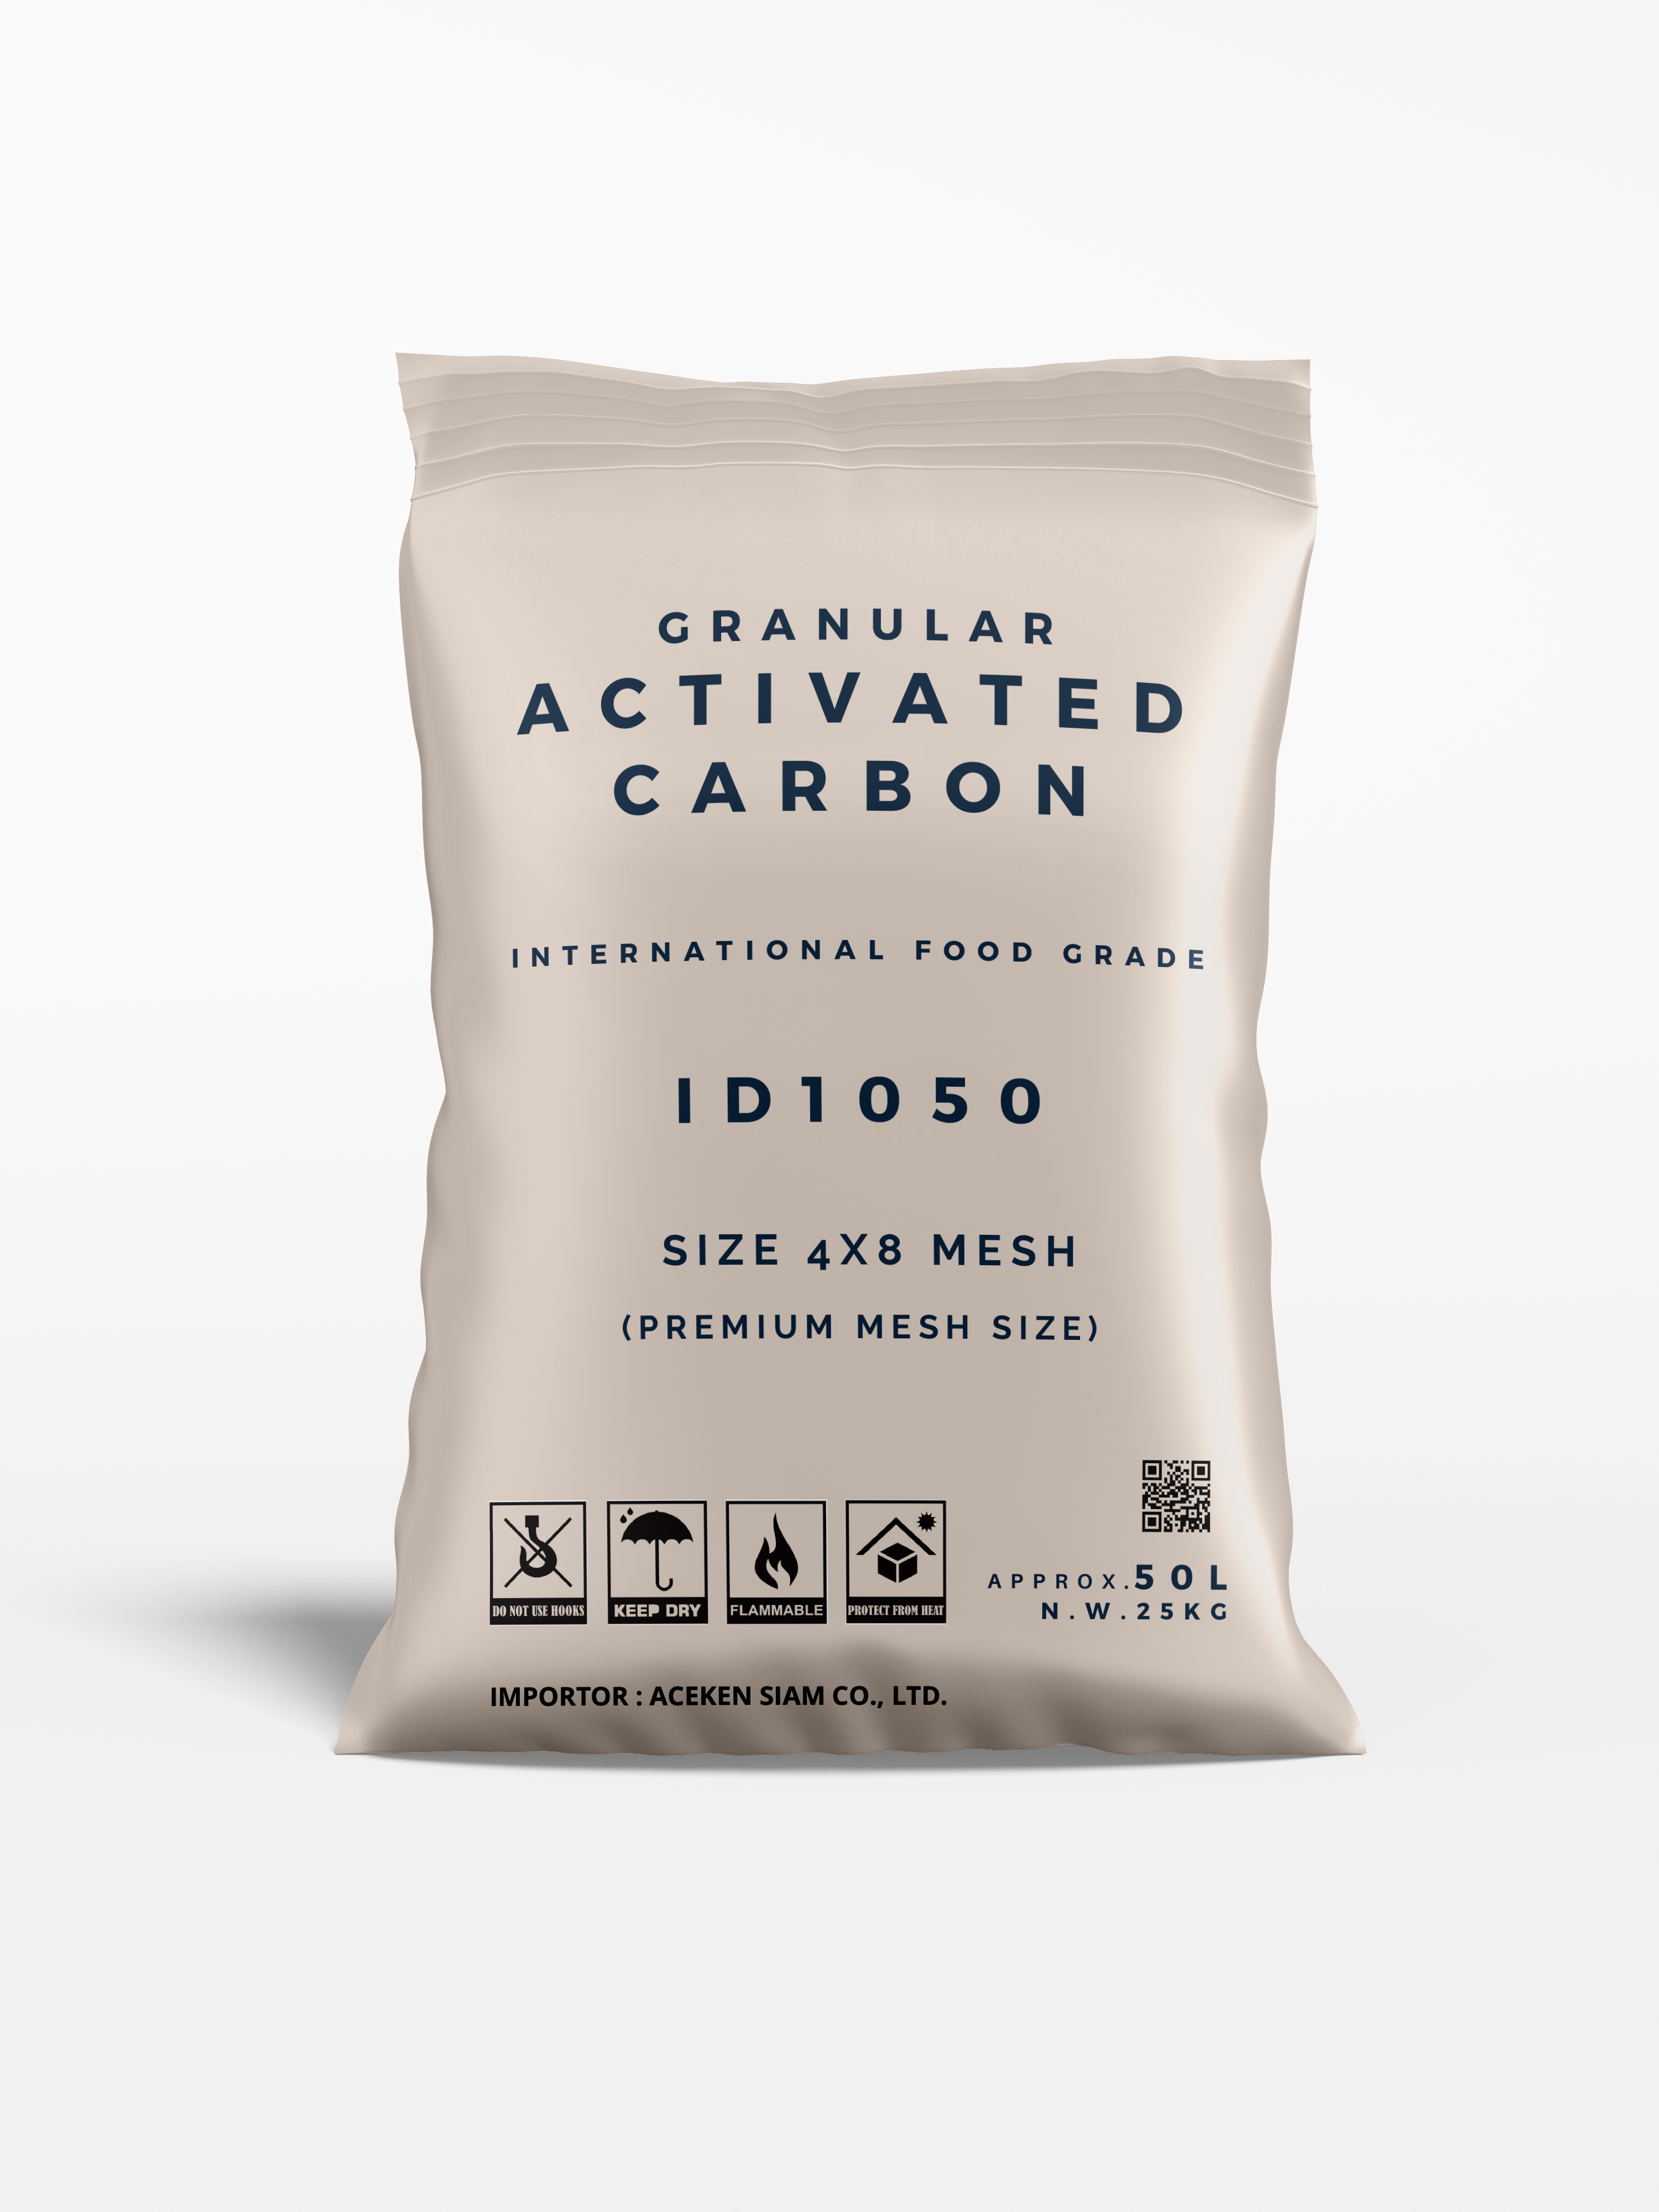 Granular Activated Carbon ID1050 4*8 mesh International Food Grade